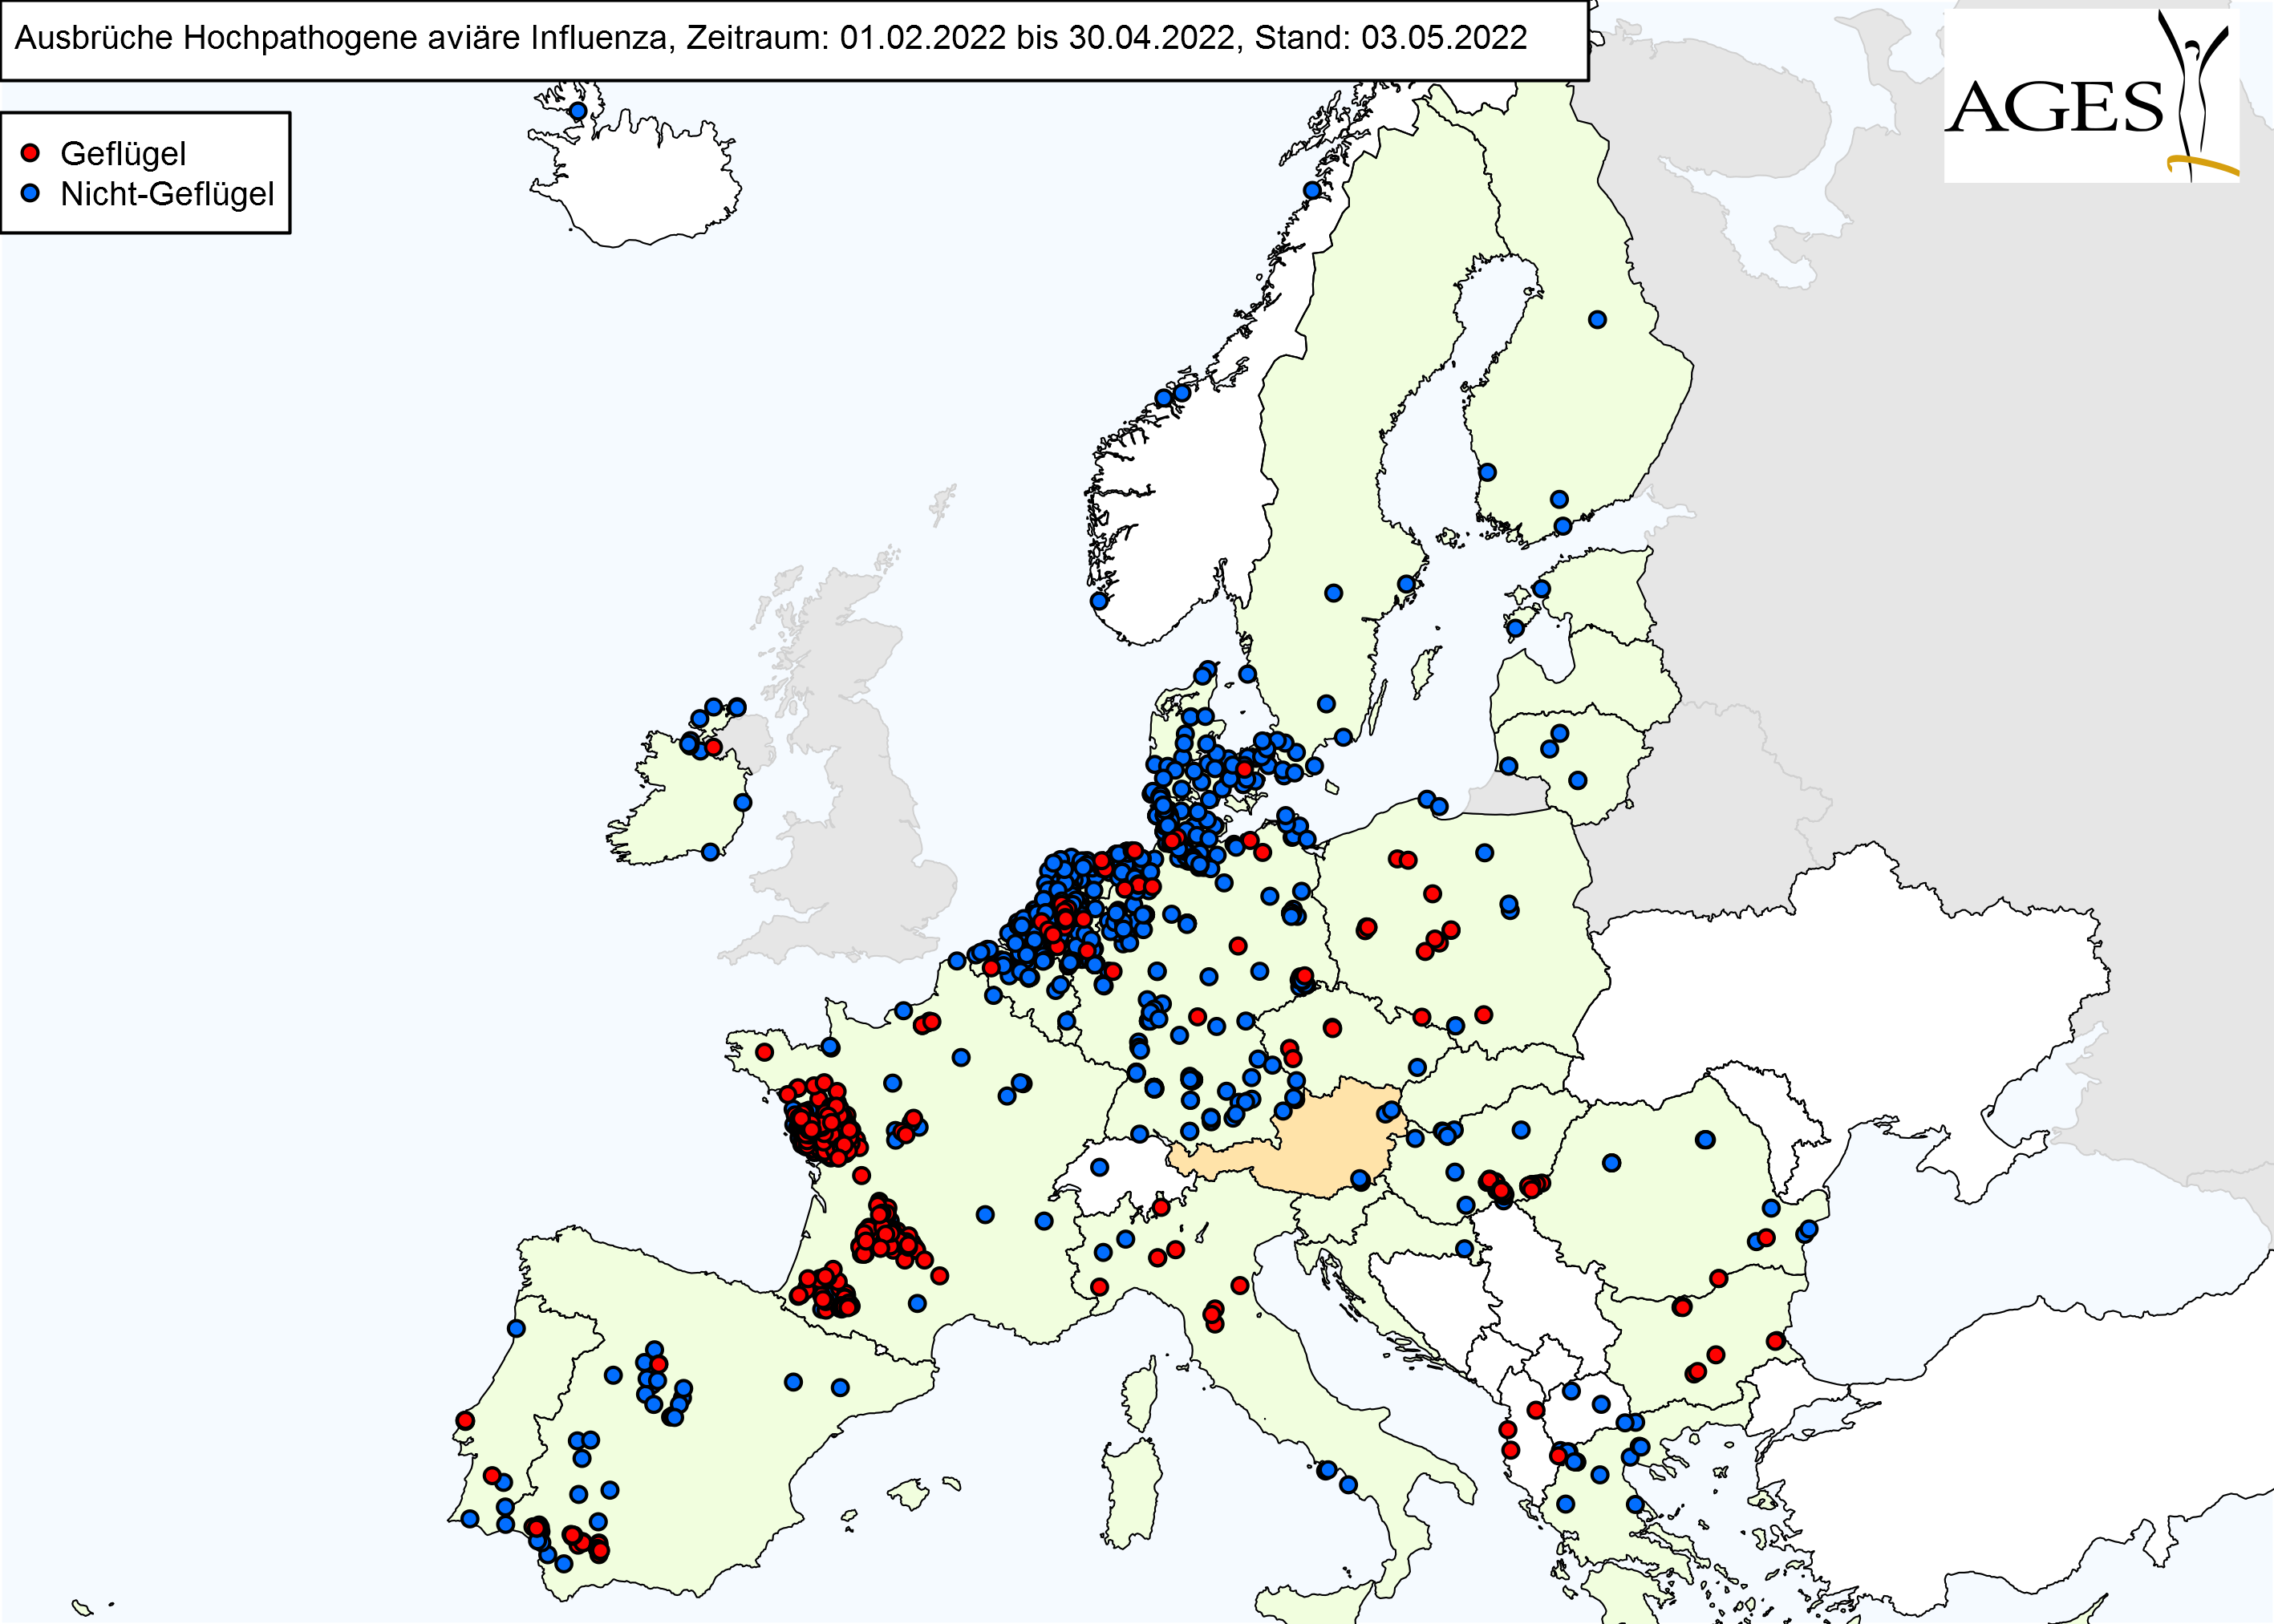 Europakarte zu HPAI-Fällen wie in "Situation in Europa" beschrieben.